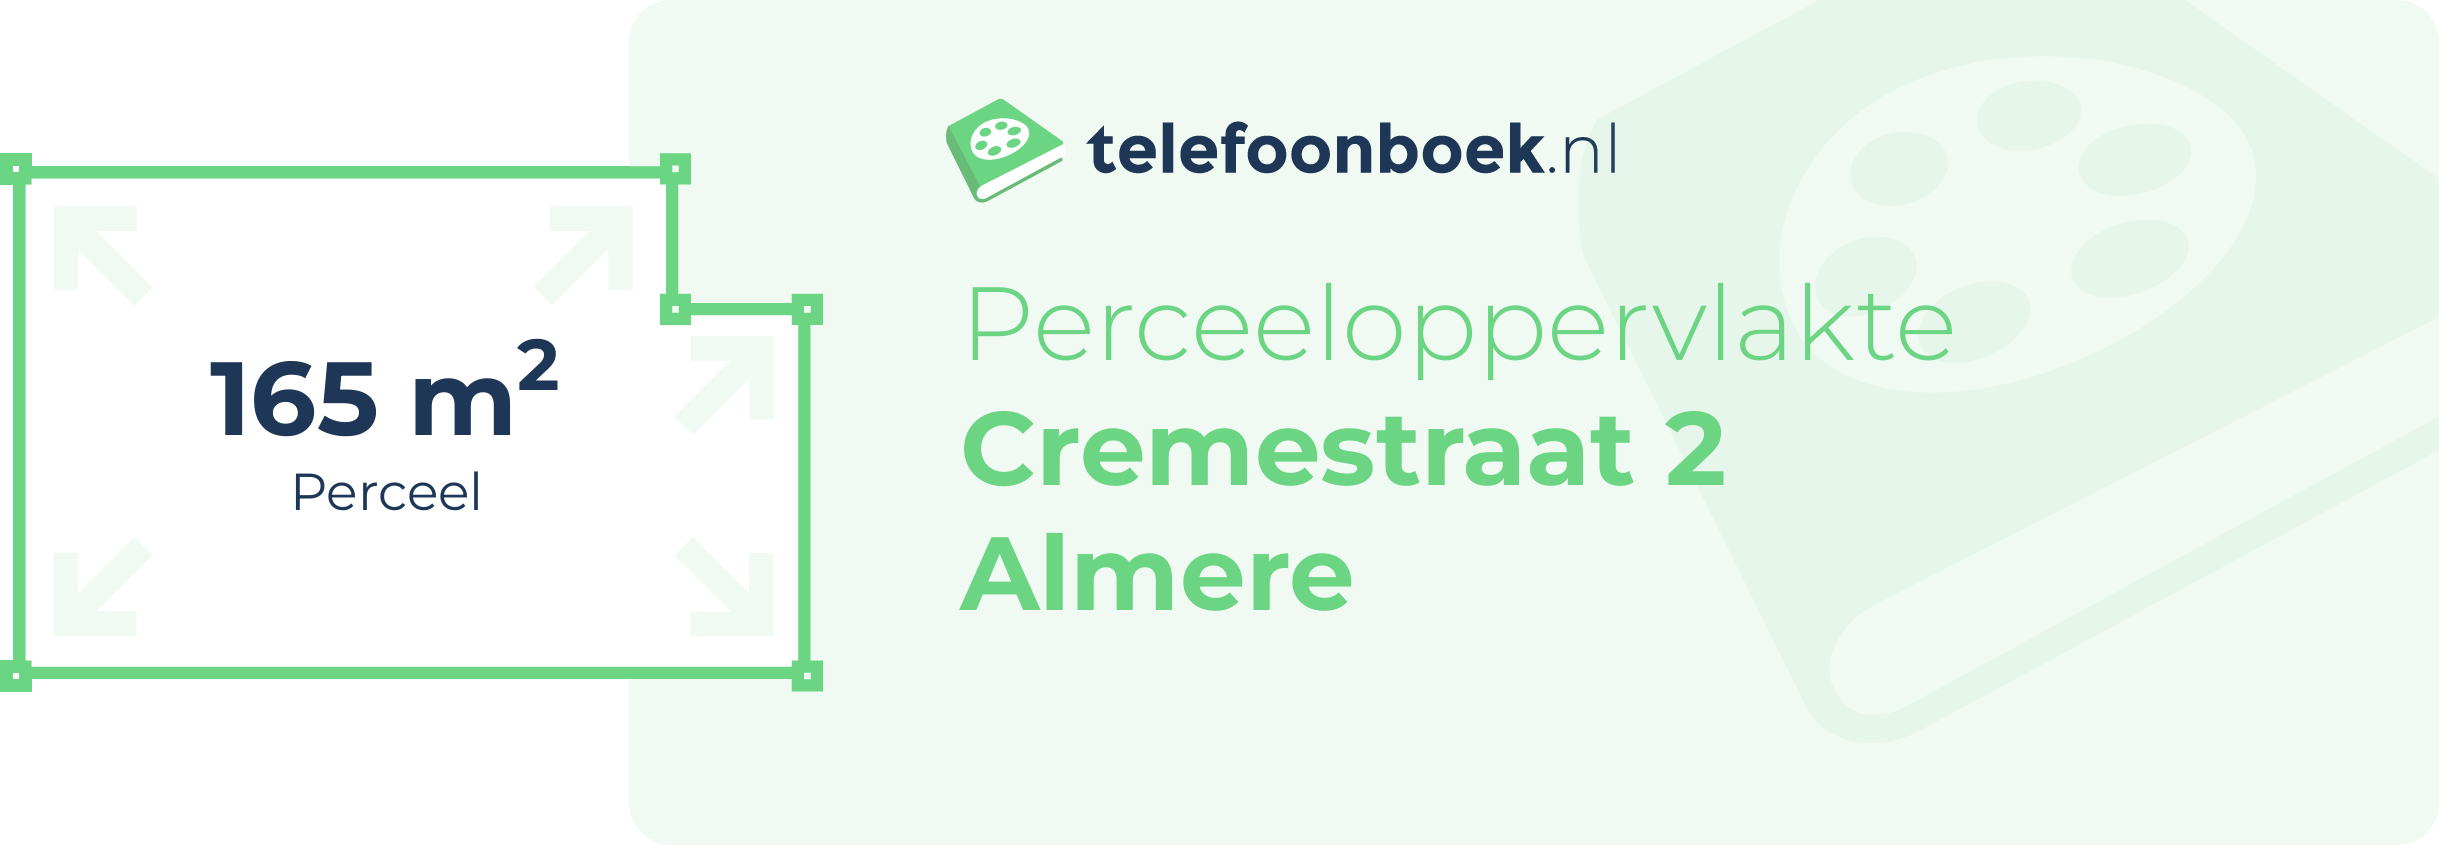 Perceeloppervlakte Cremestraat 2 Almere